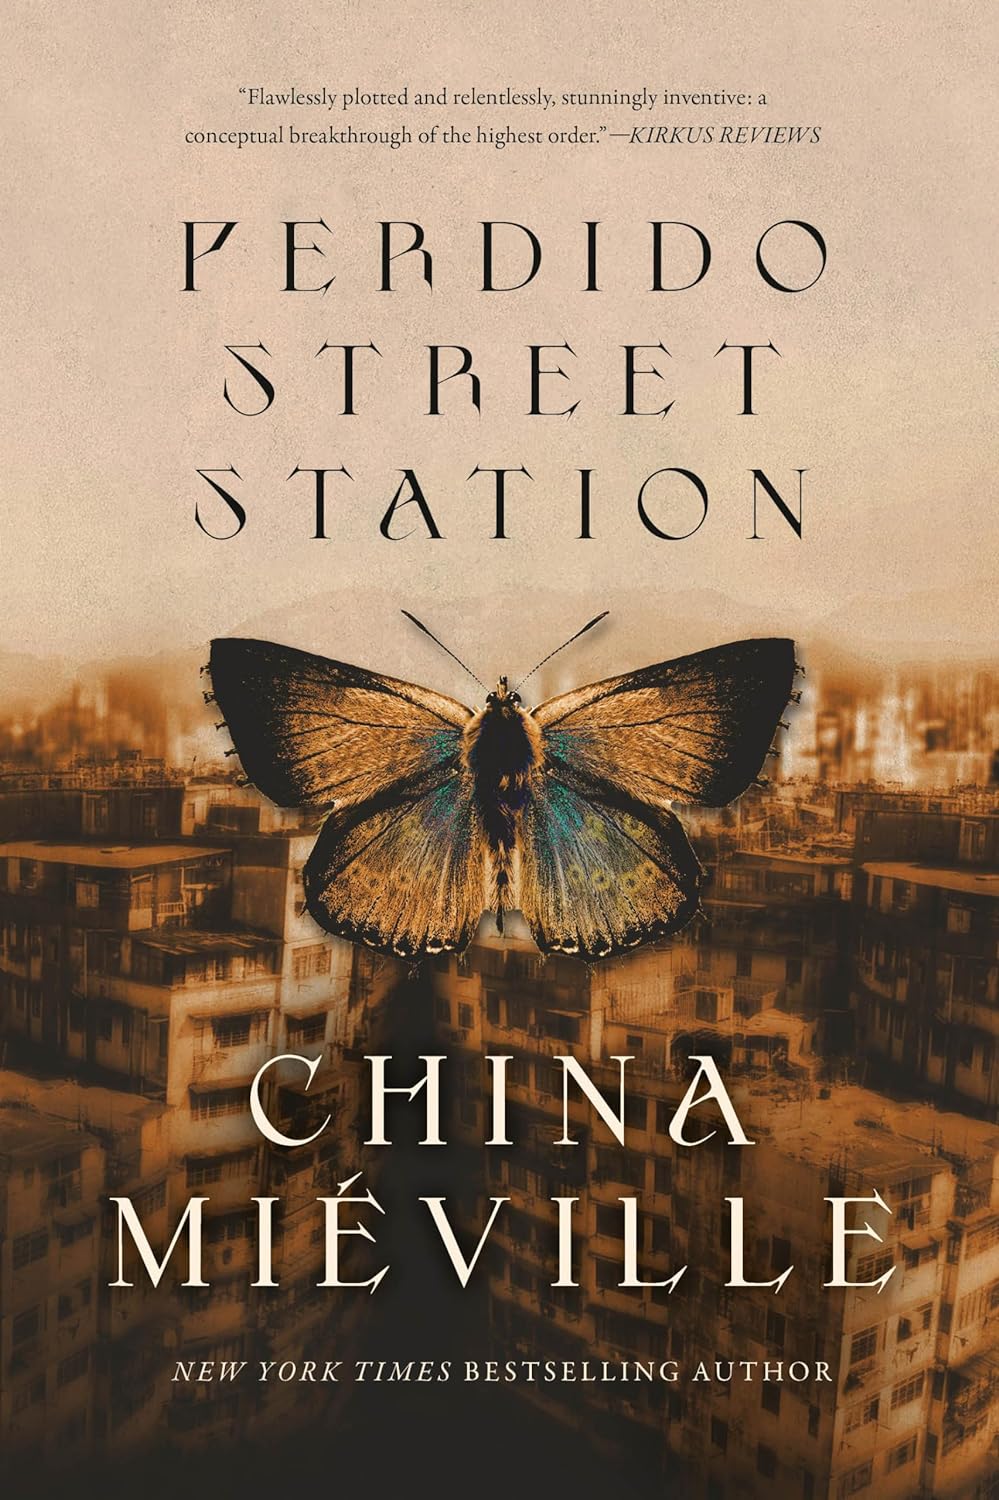 Perdido Street Station, by China Miéville